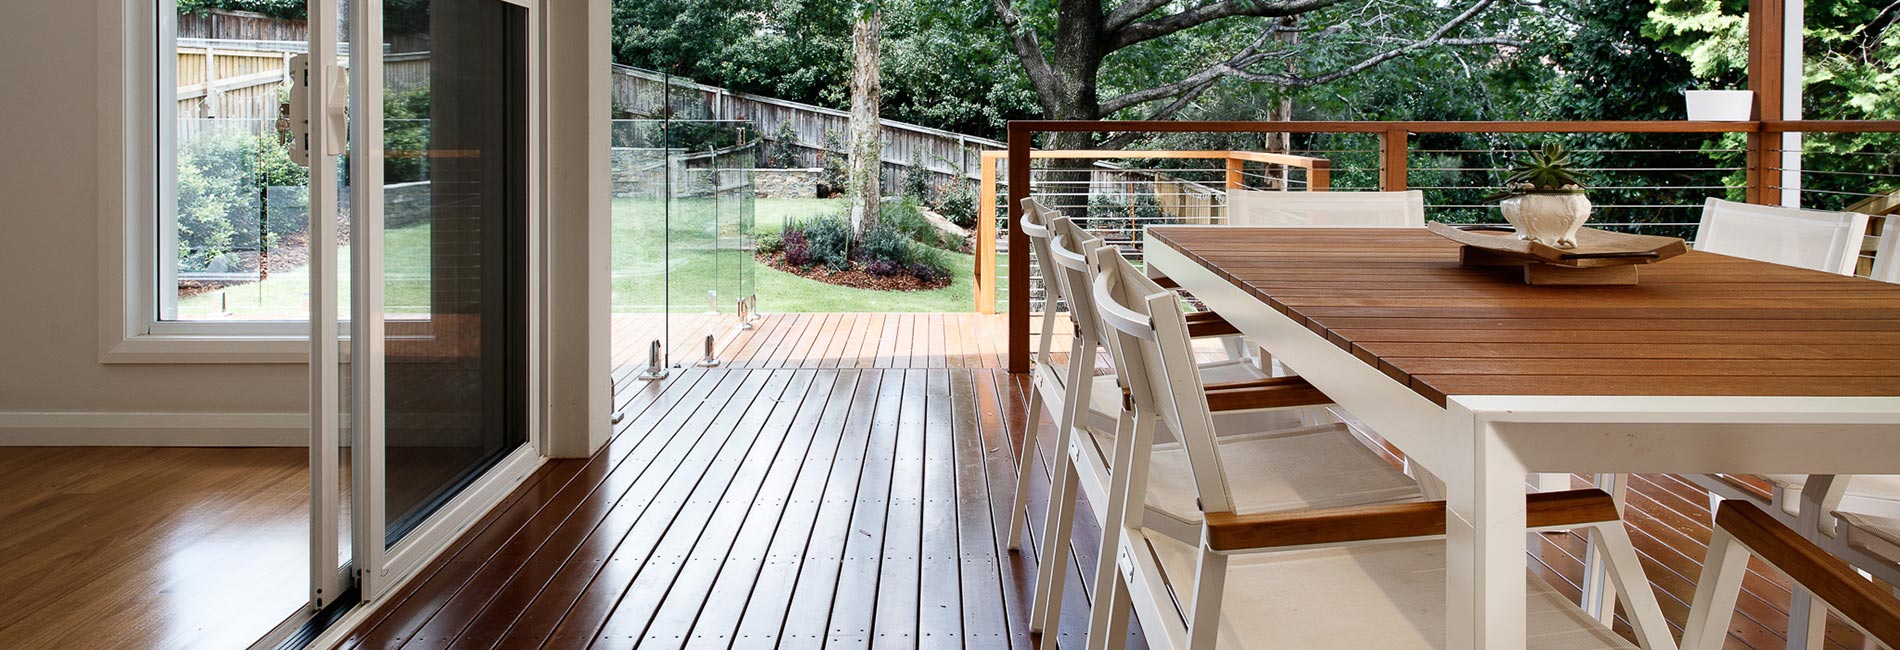 timber deck on bushfire prone land